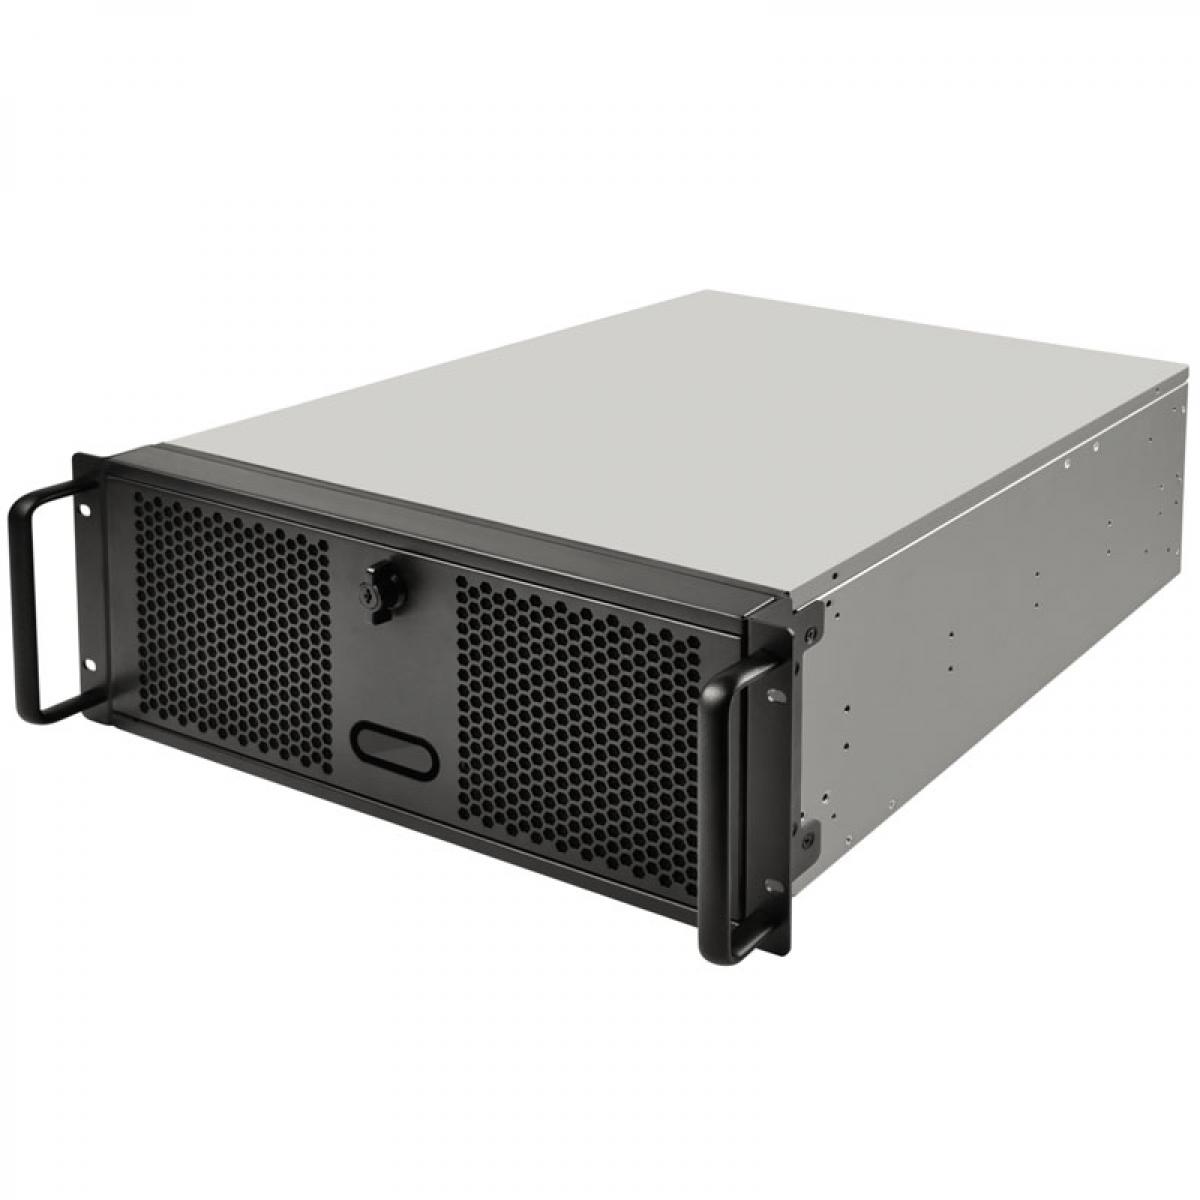 Silverstone - SILVERSTONE SST-RM400 Montage sur rack Server - 4U - Boitier PC